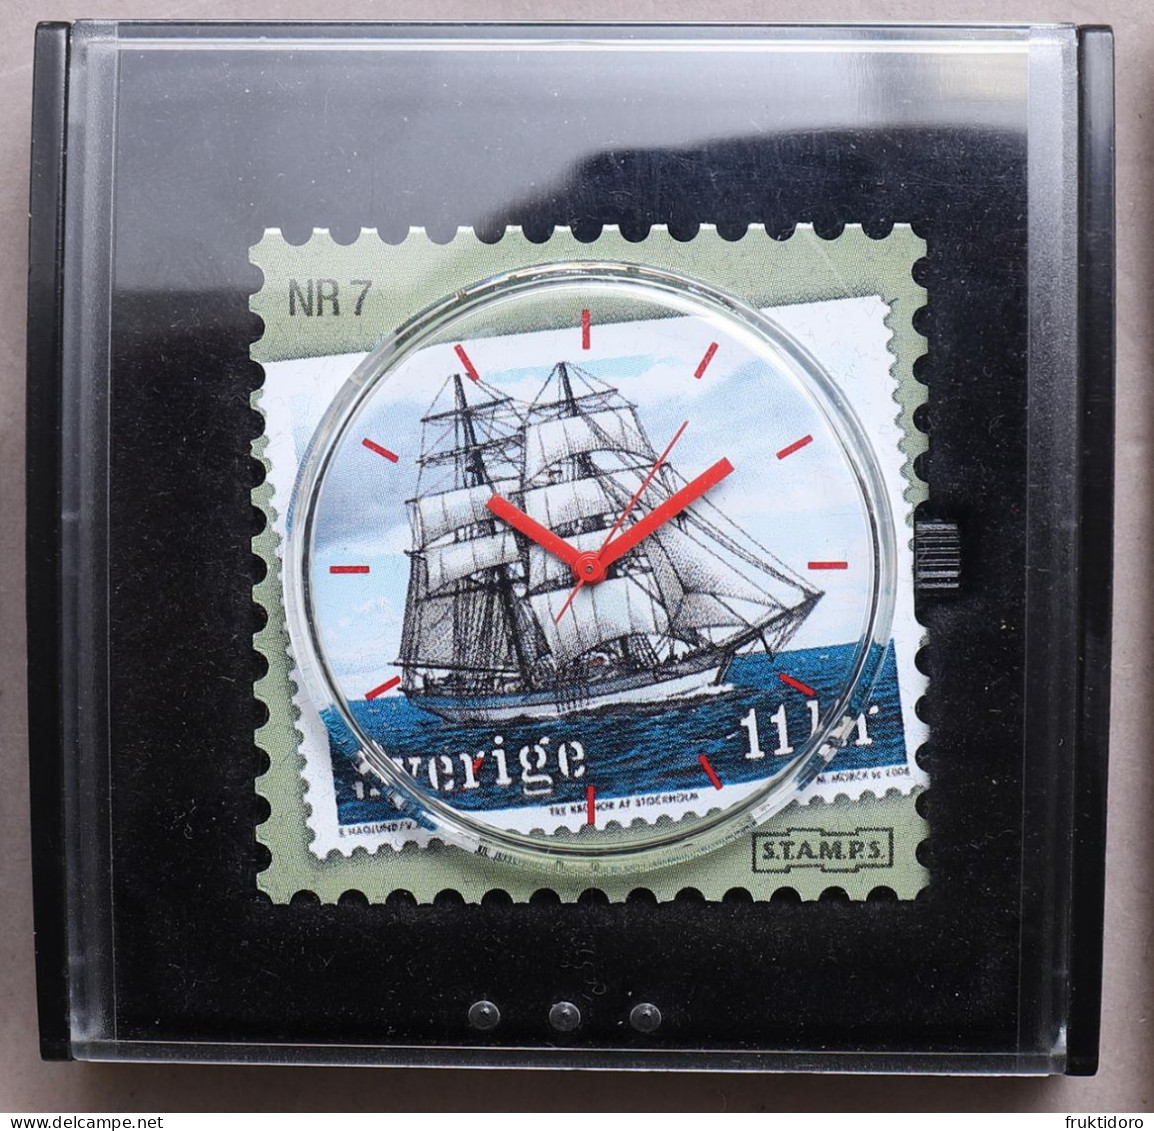 Sweden Stamp Clock Nr 7 - Sailboat T/S Gunilla - 2008 - Montres Modernes